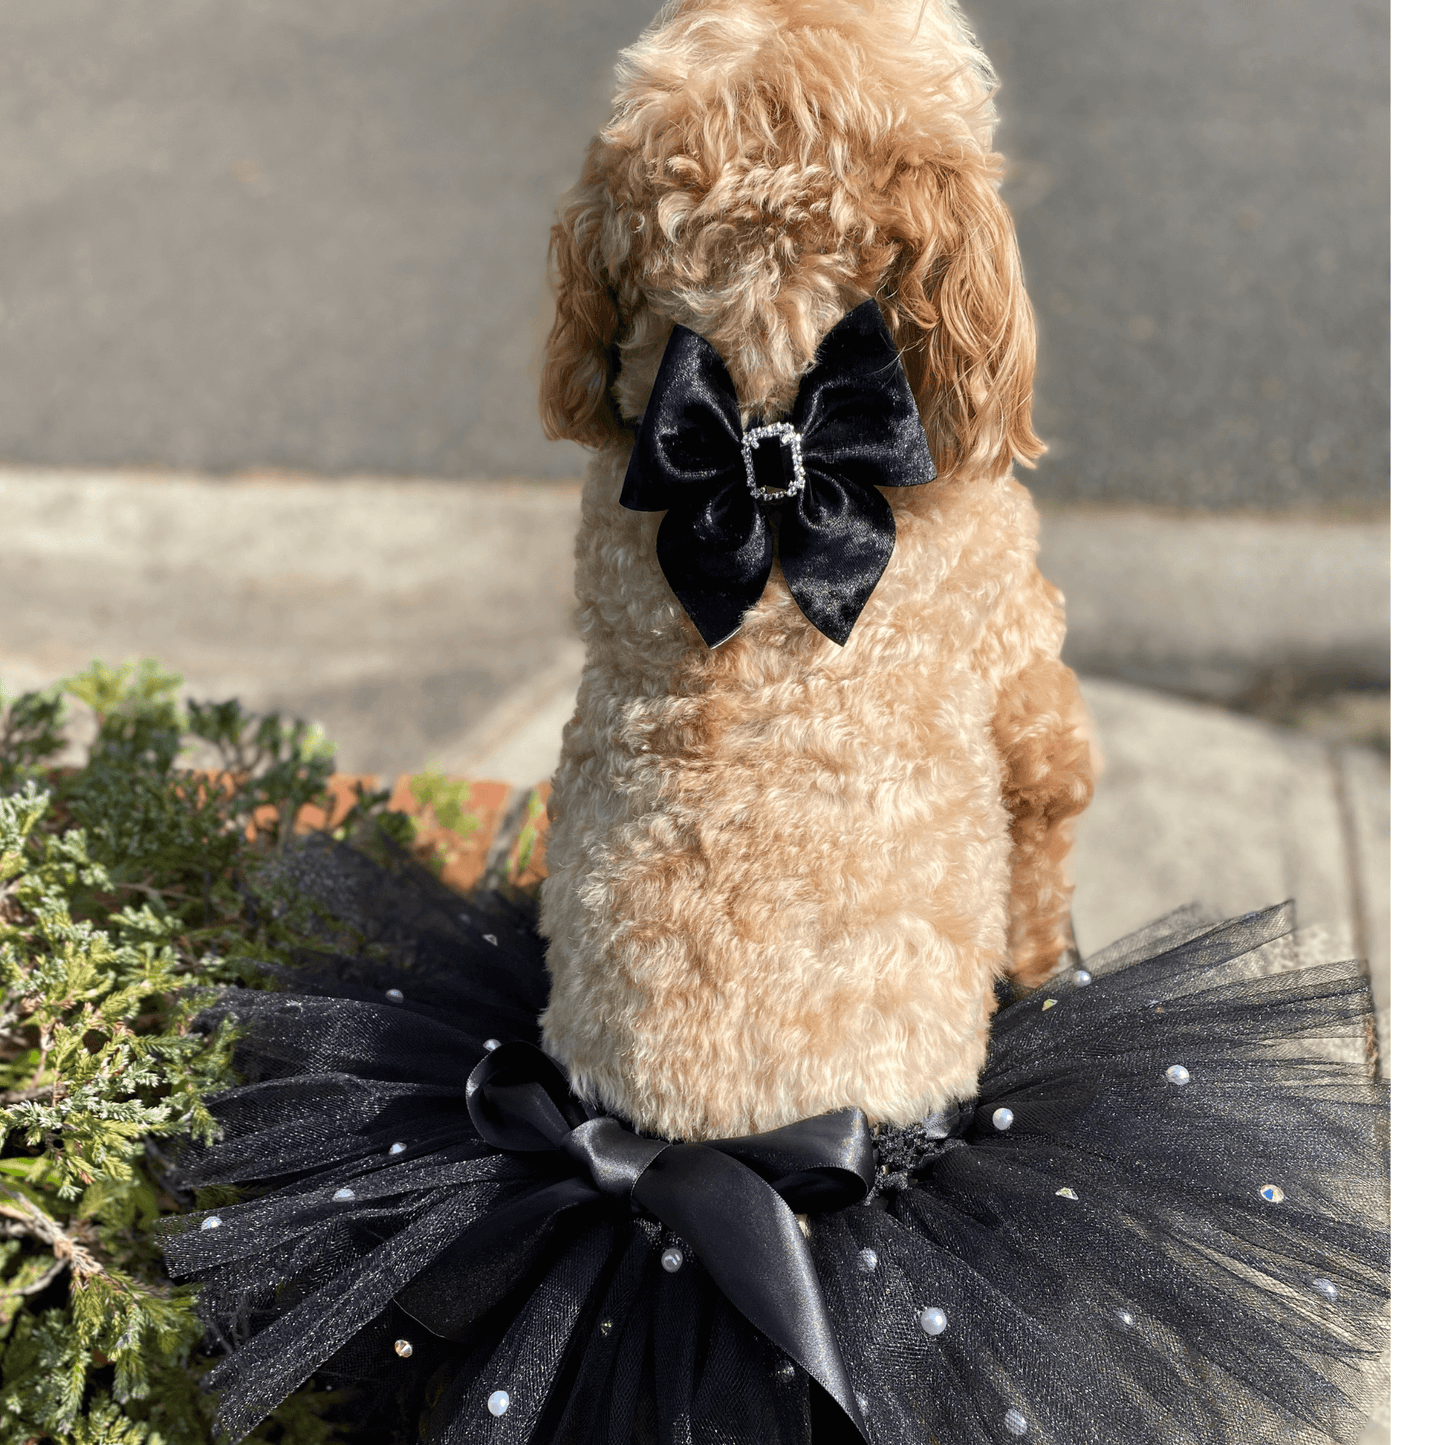 sailor bow crushed black velvet dog fashion